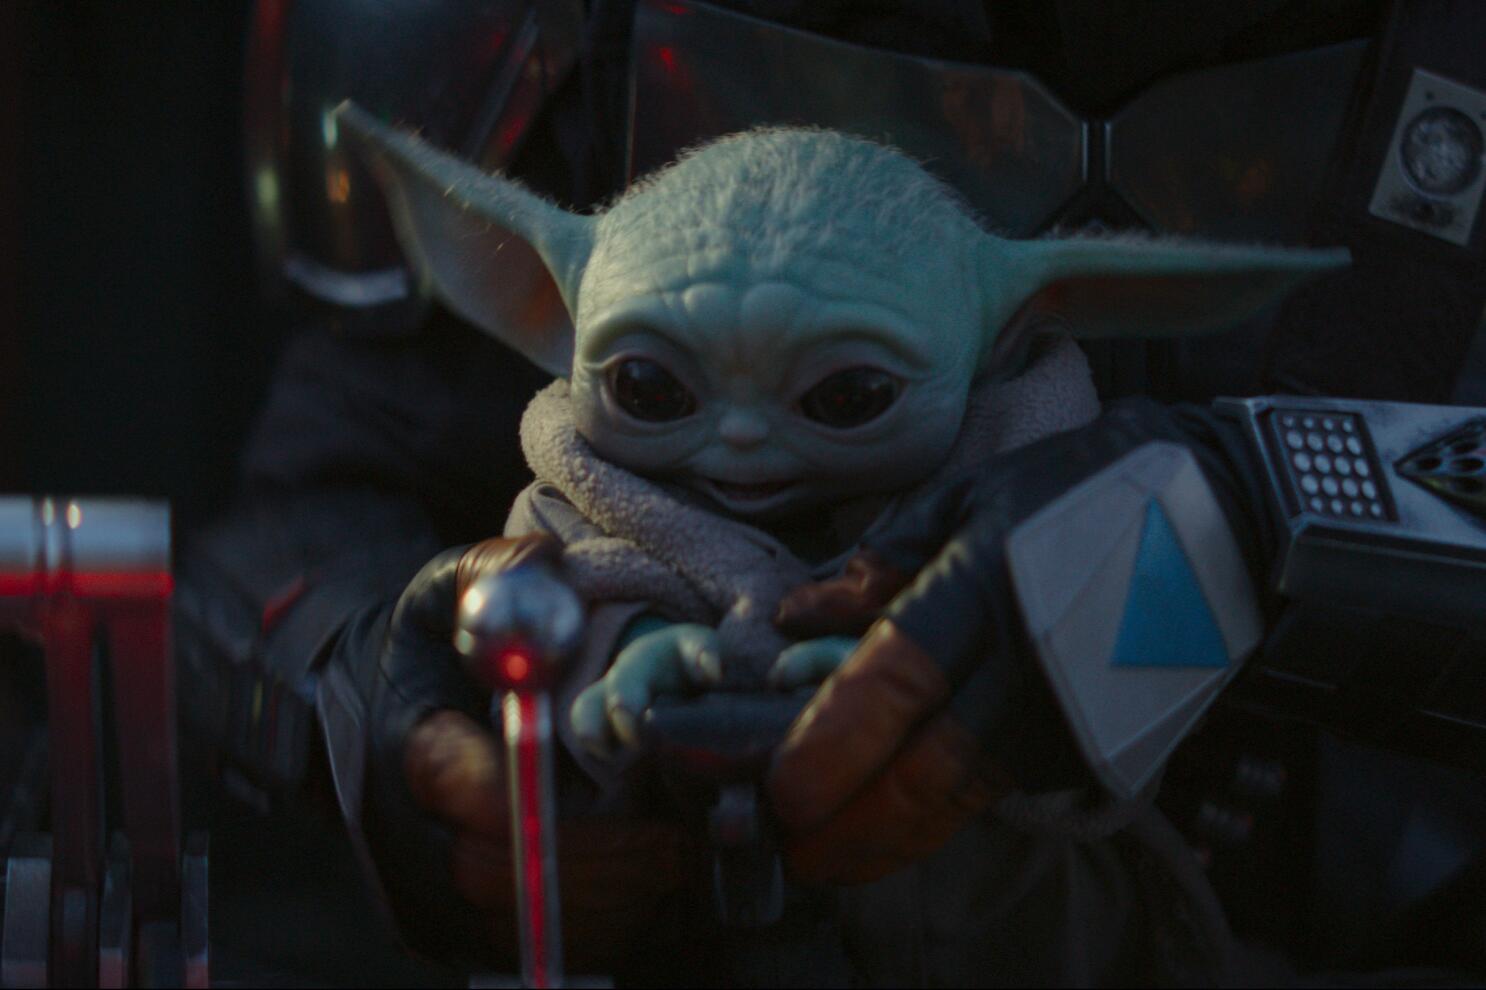 MONOPOLY The Child - Baby Yoda